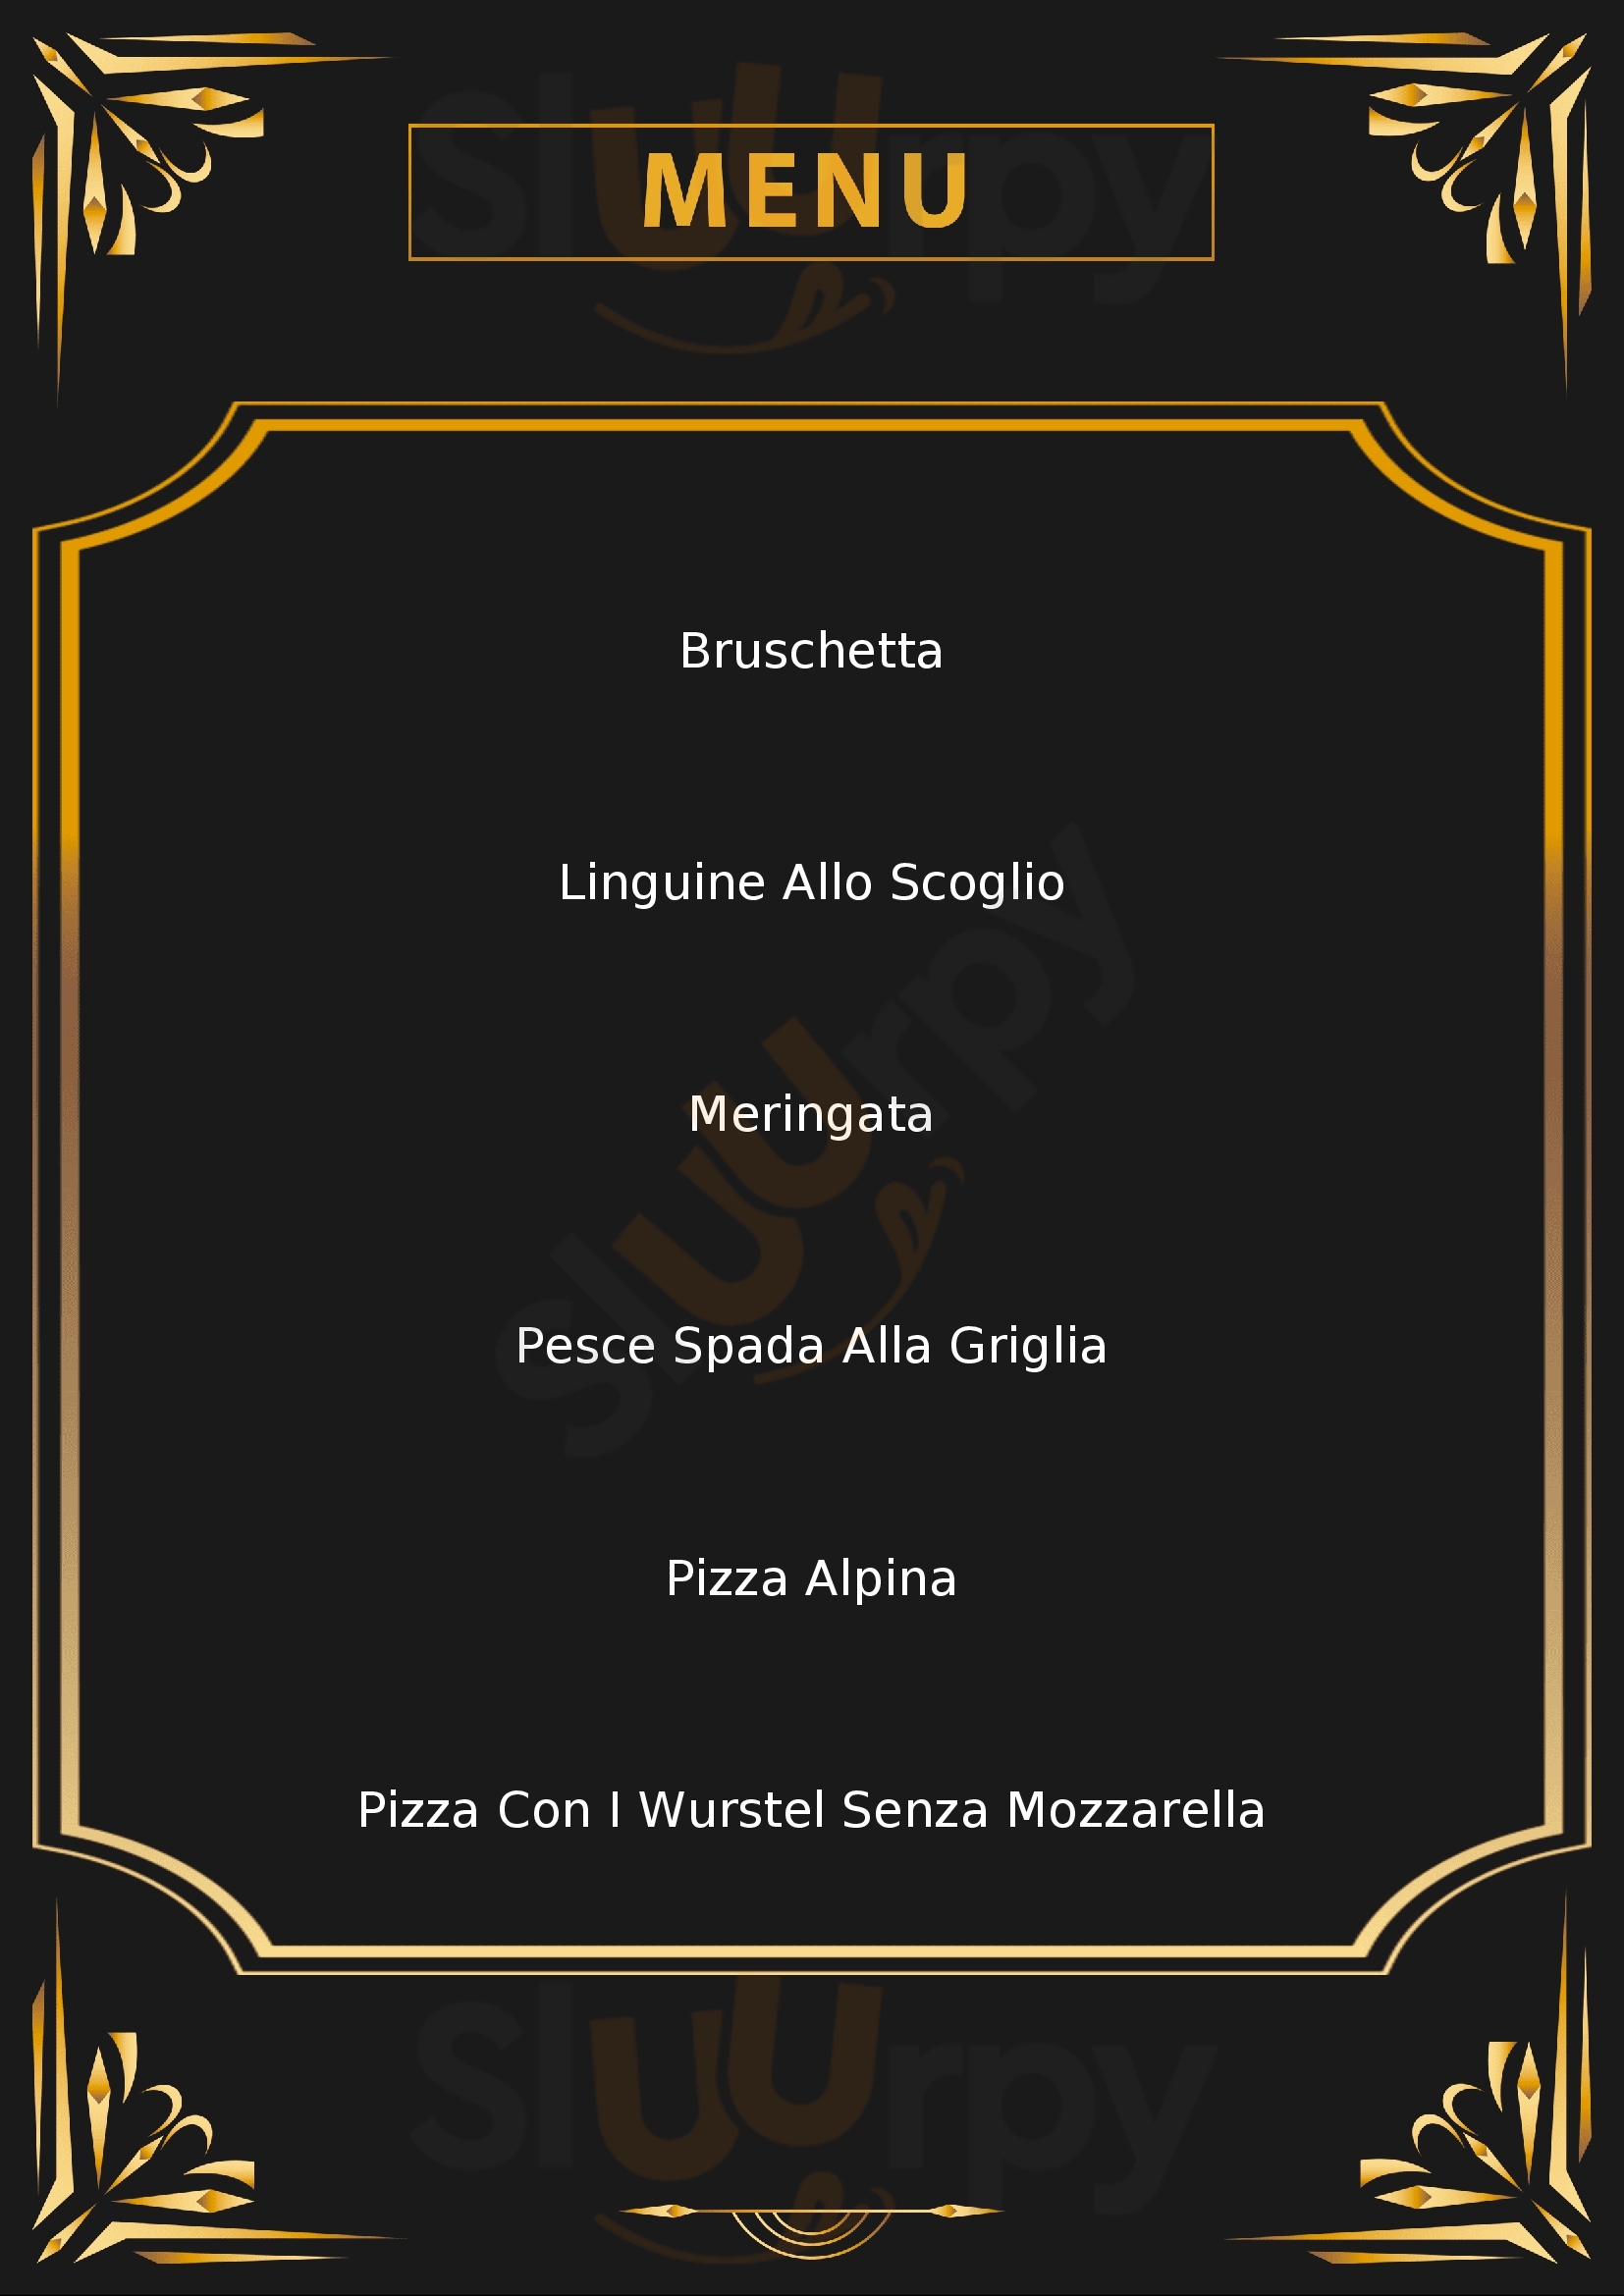 Ristorante Pizzeria Ul Pustasc Appiano Gentile menù 1 pagina